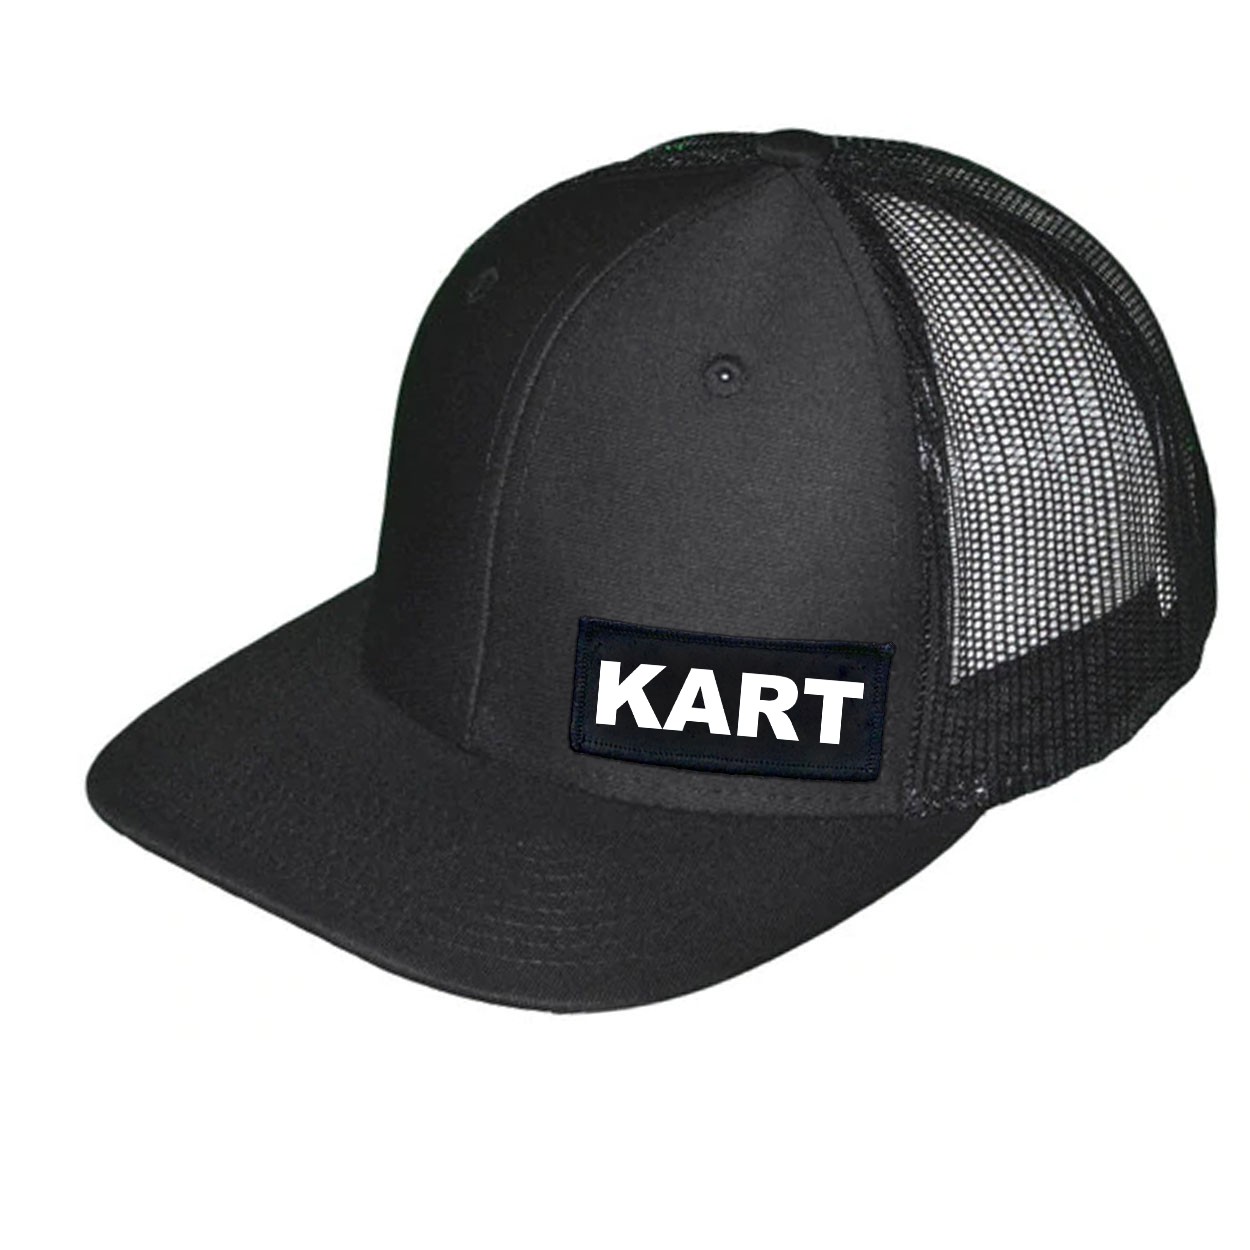 Kart Brand Logo Night Out Woven Patch Snapback Trucker Hat Black